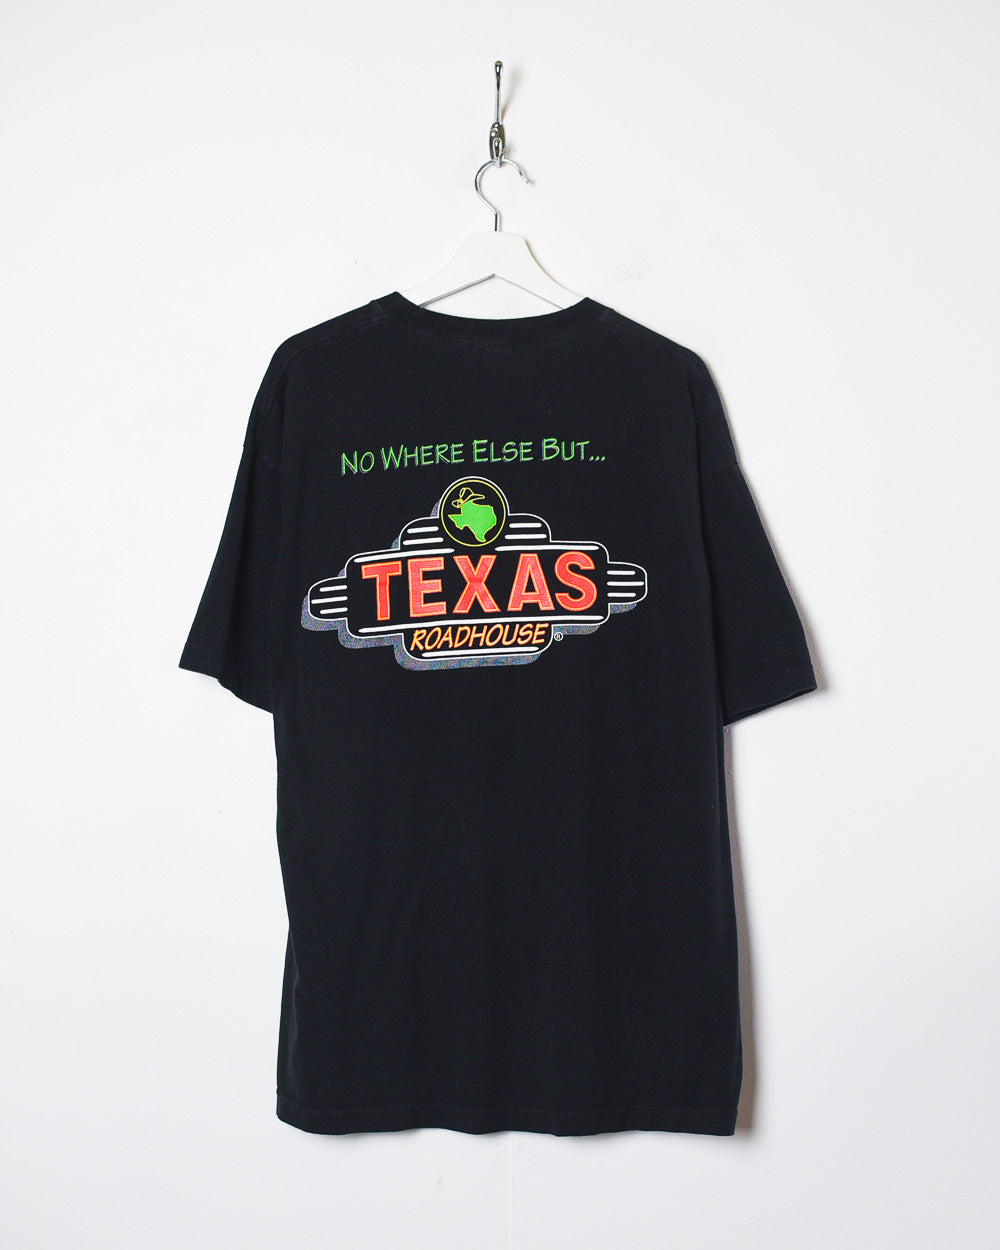 Black Texas Road House Harrisburg PA T-Shirt - X-Large